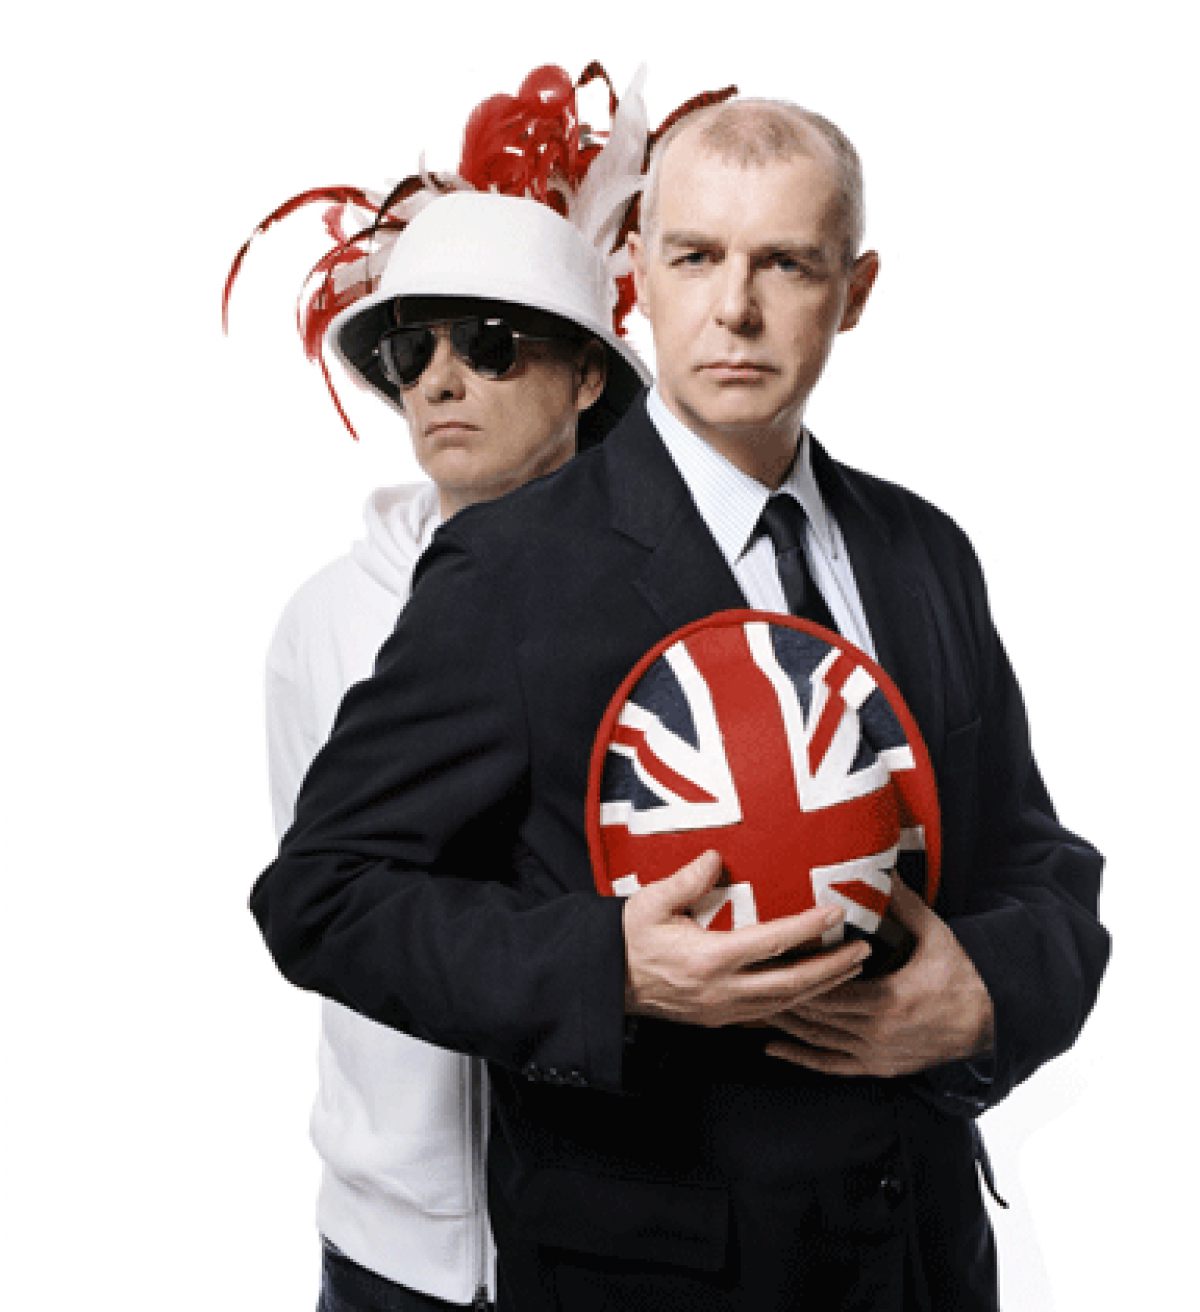 HQ Pet Shop Boys Wallpapers | File 109.92Kb